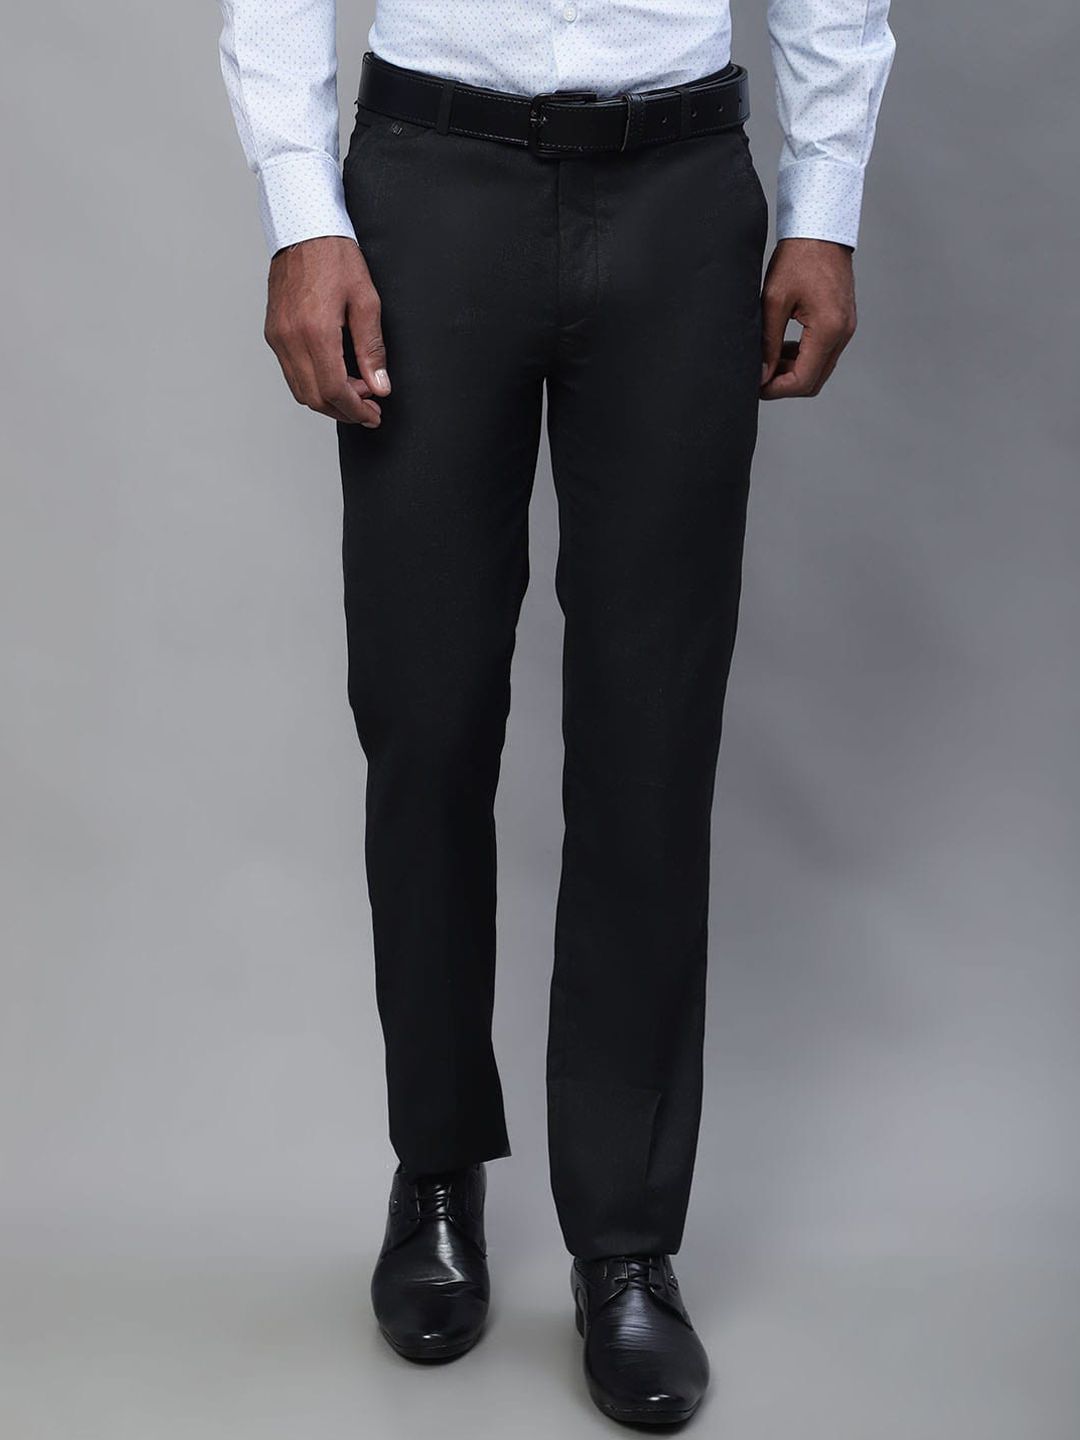 VAN HEUSEN Textured LowRise Slim Fit Trousers  Lifestyle Stores   Goregaon East  Mumbai